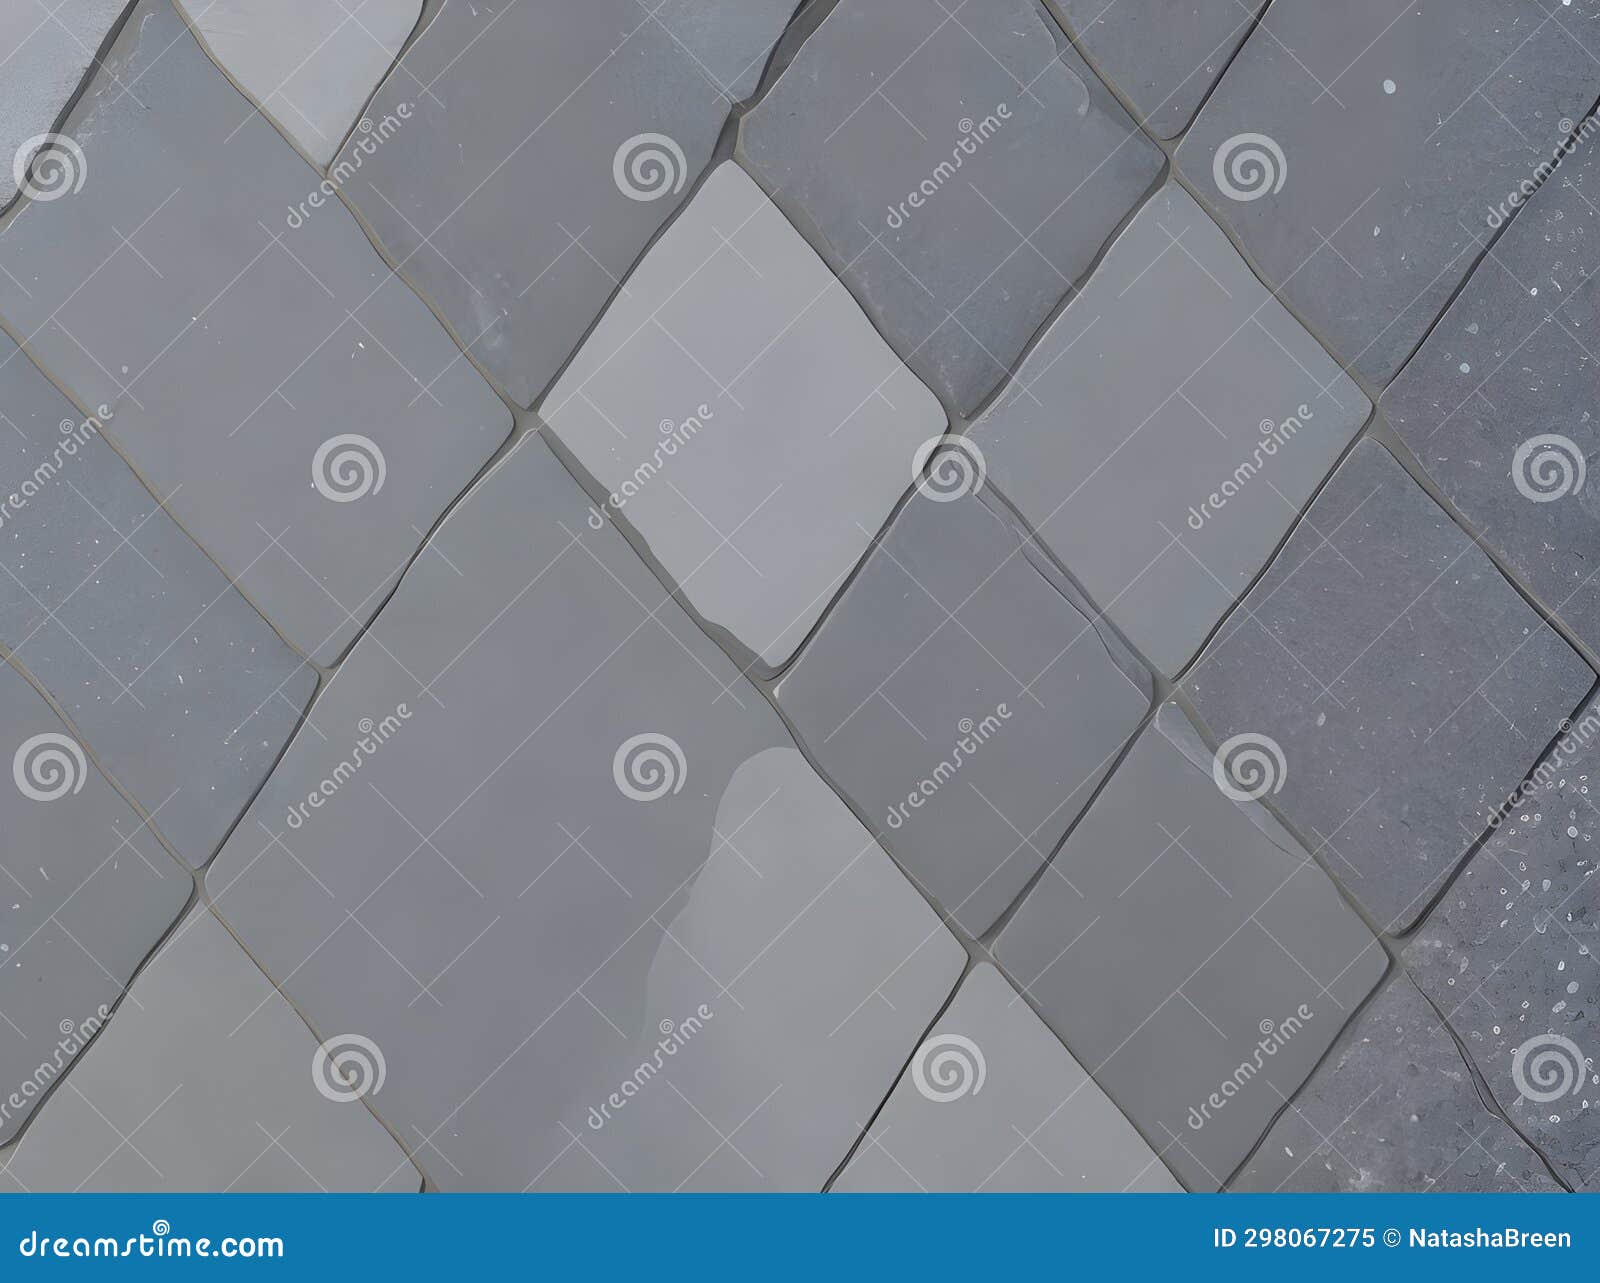 Stone Background 3D Pantone Color Palette Stock Image - Image of sleek ...